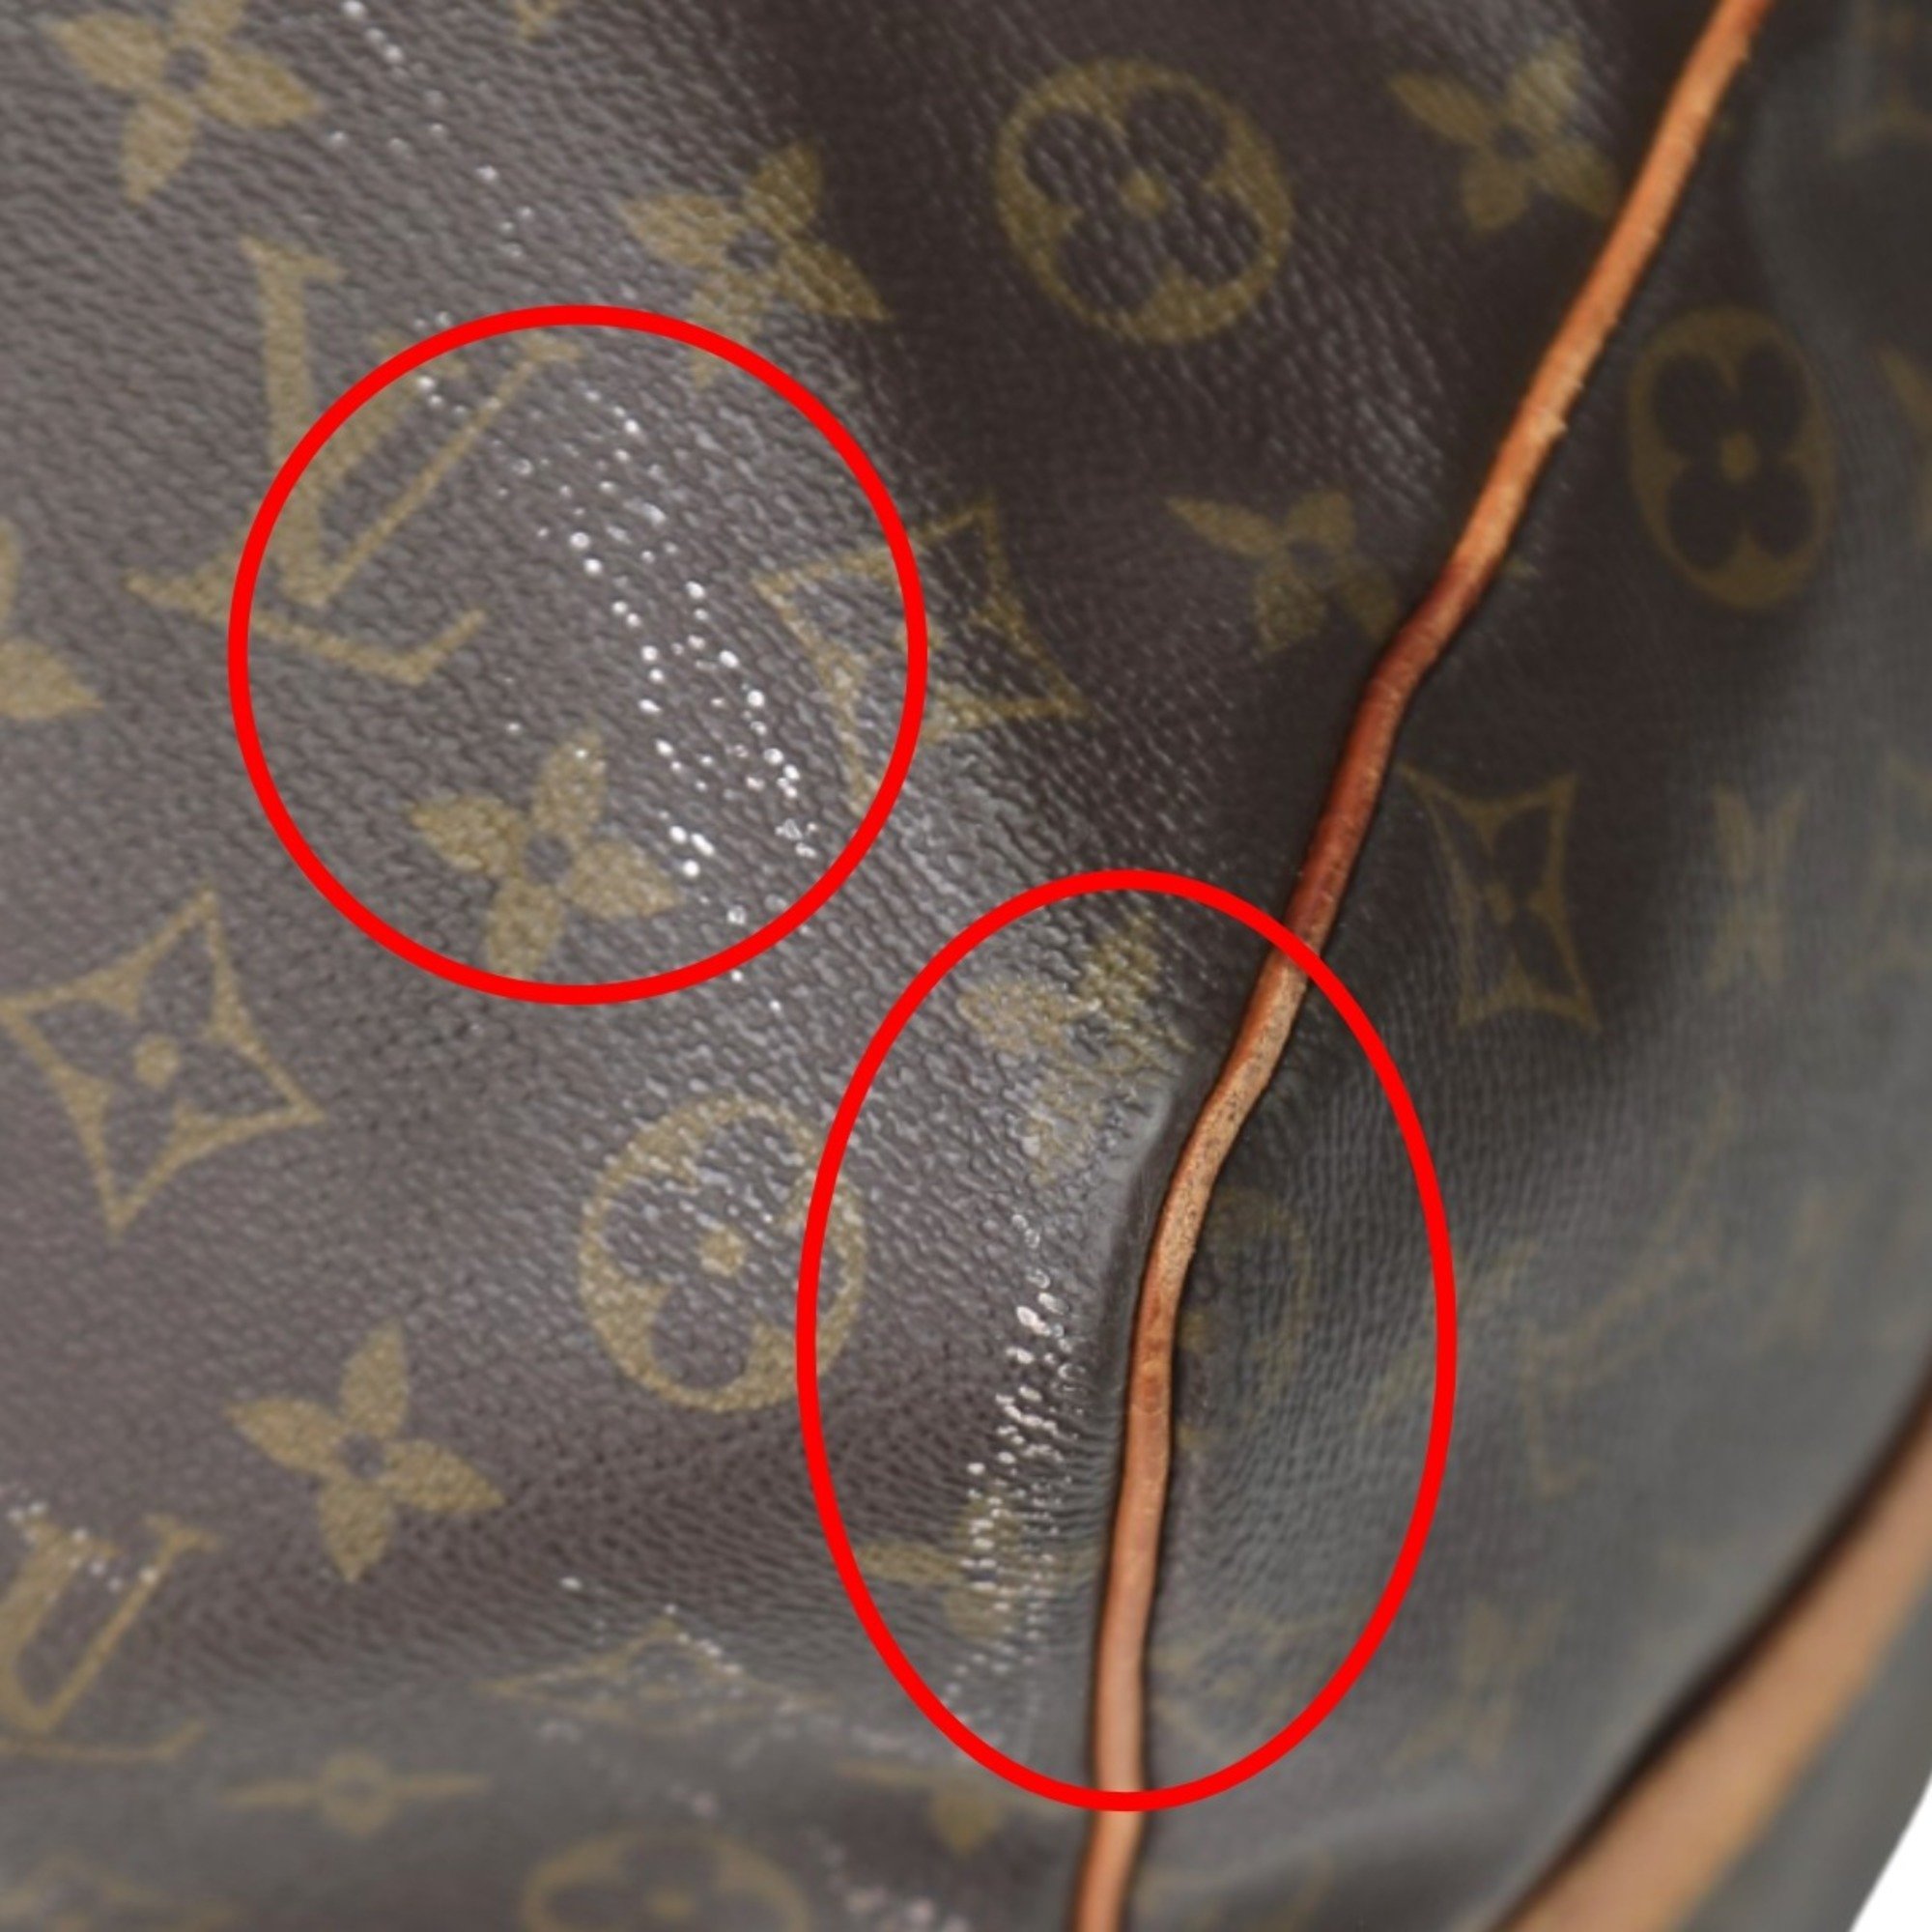 Louis Vuitton LOUIS VUITTON Boston Bag Monogram Keepall Bandouliere 60 Canvas M41412 Brown LV